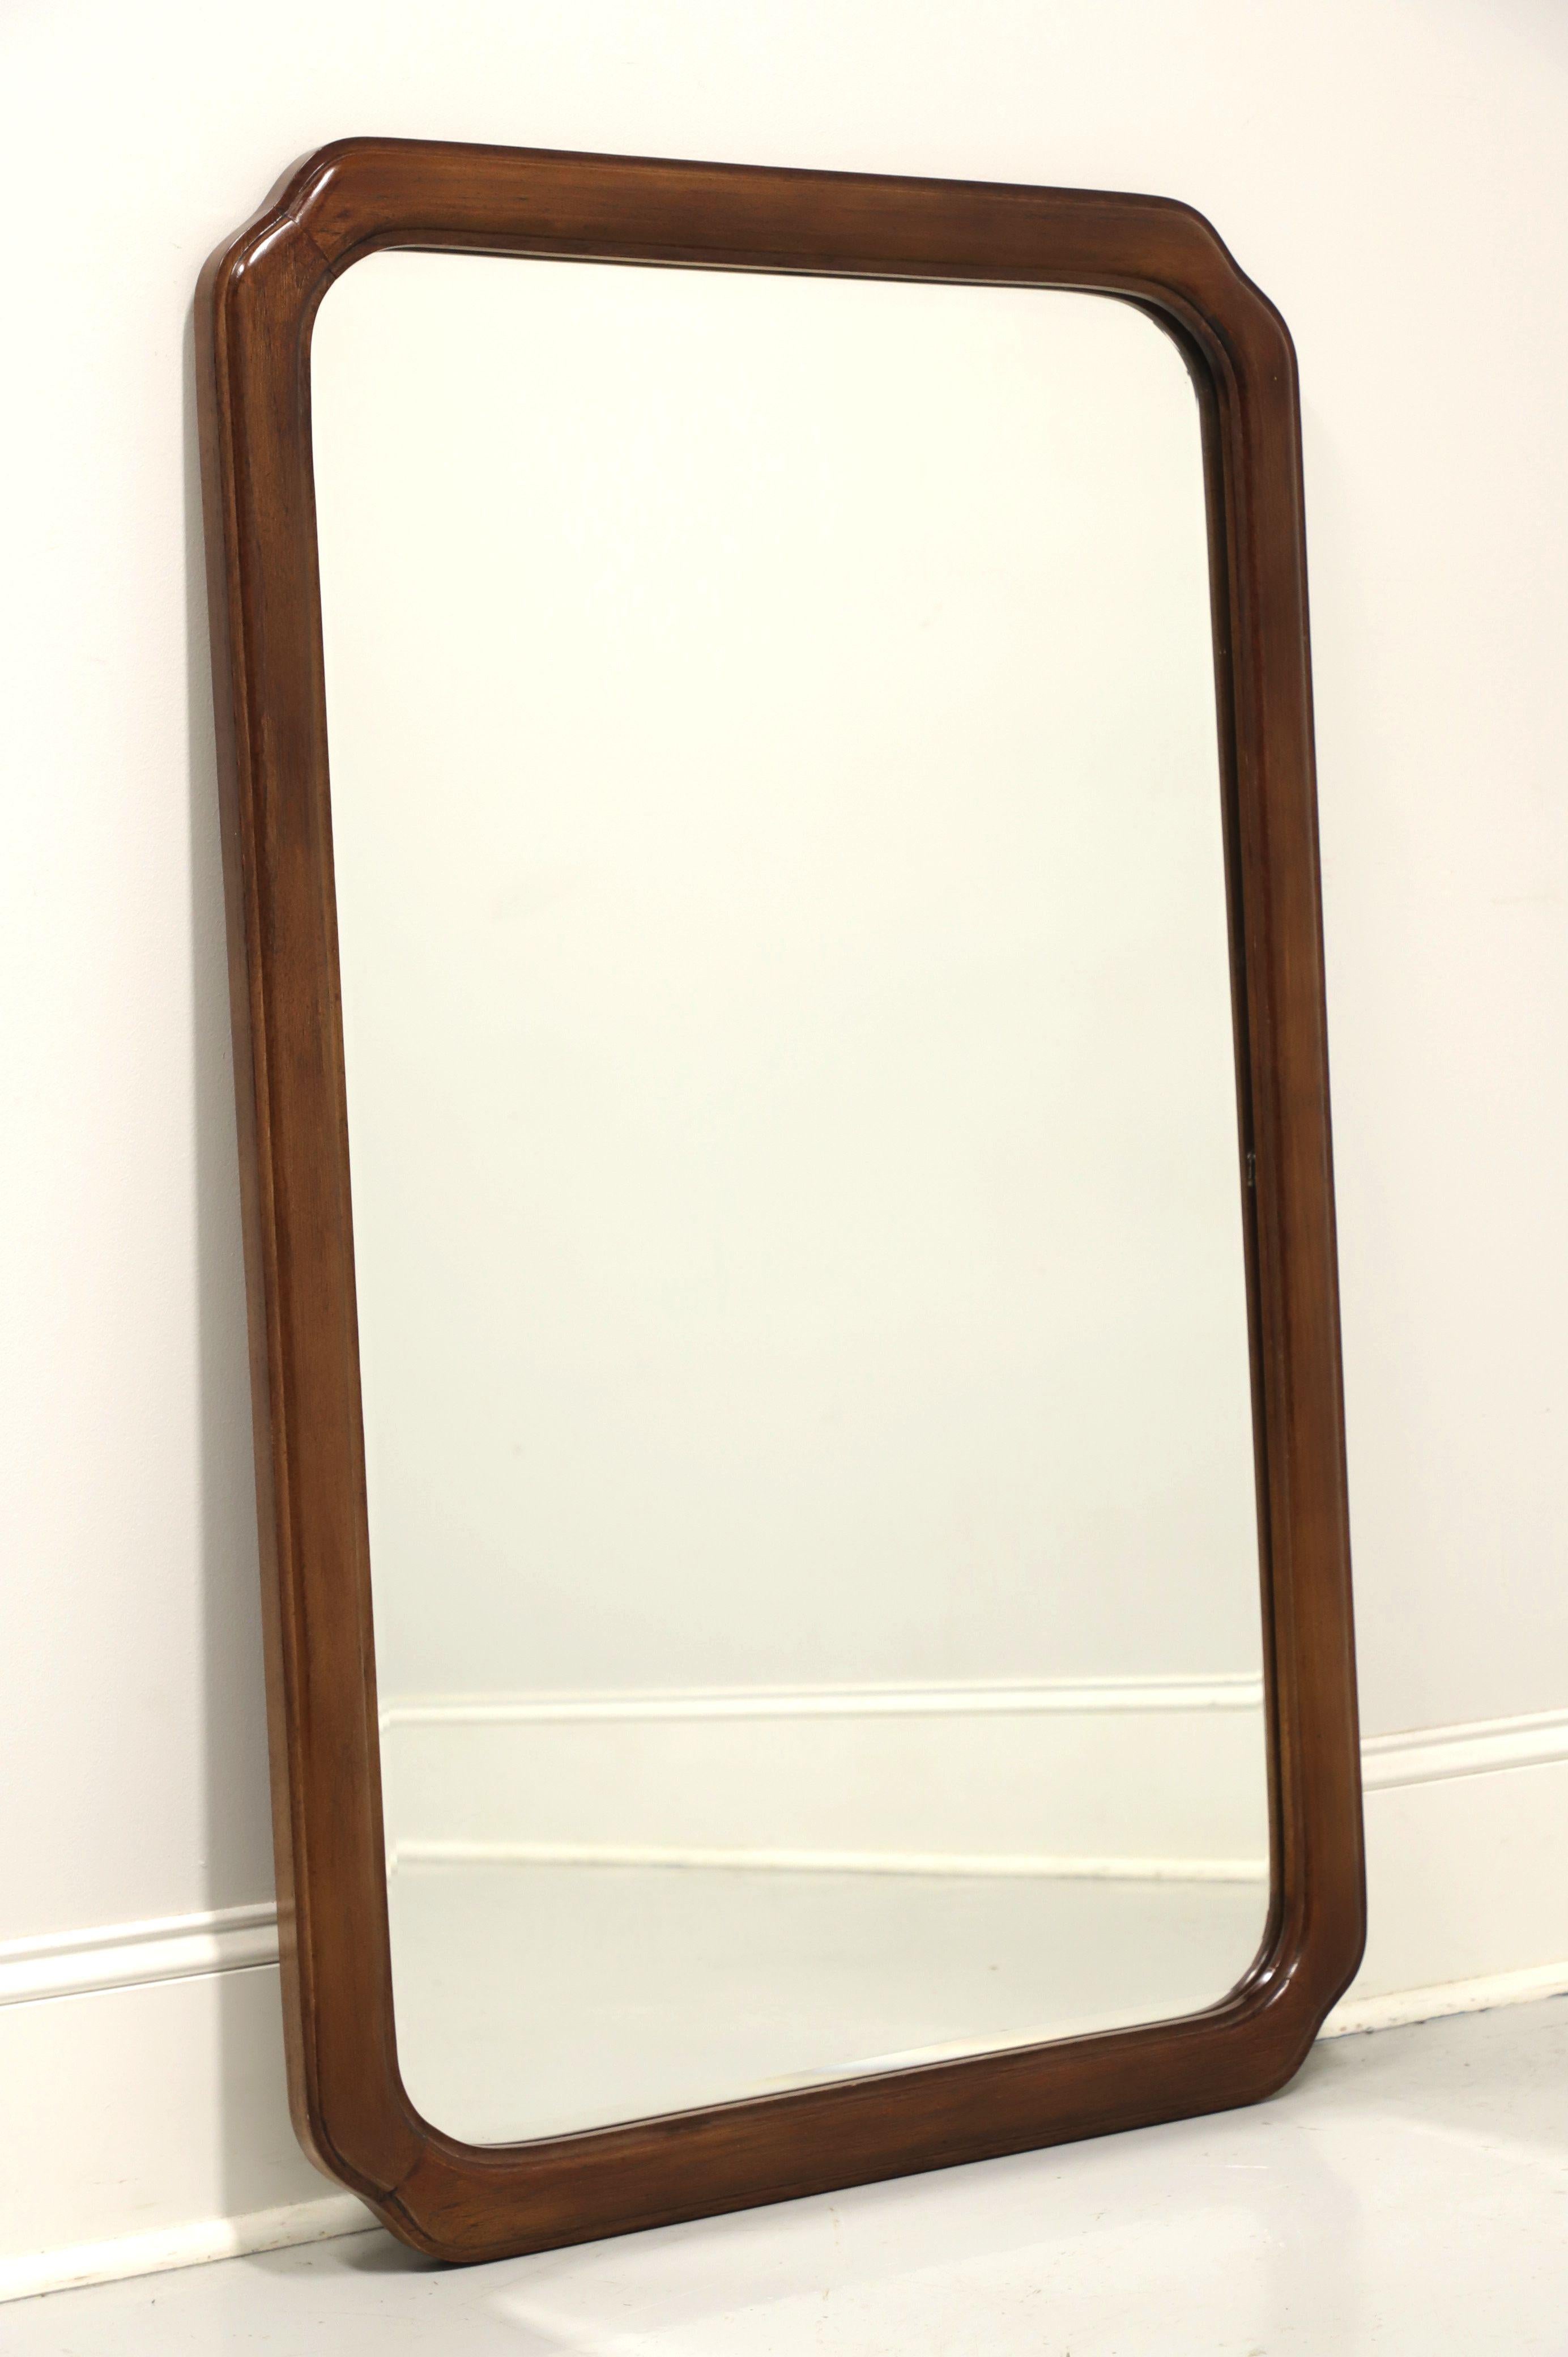 THOMASVILLE Mystique Walnut Asian Influenced Dresser / Wall Mirror For Sale 3